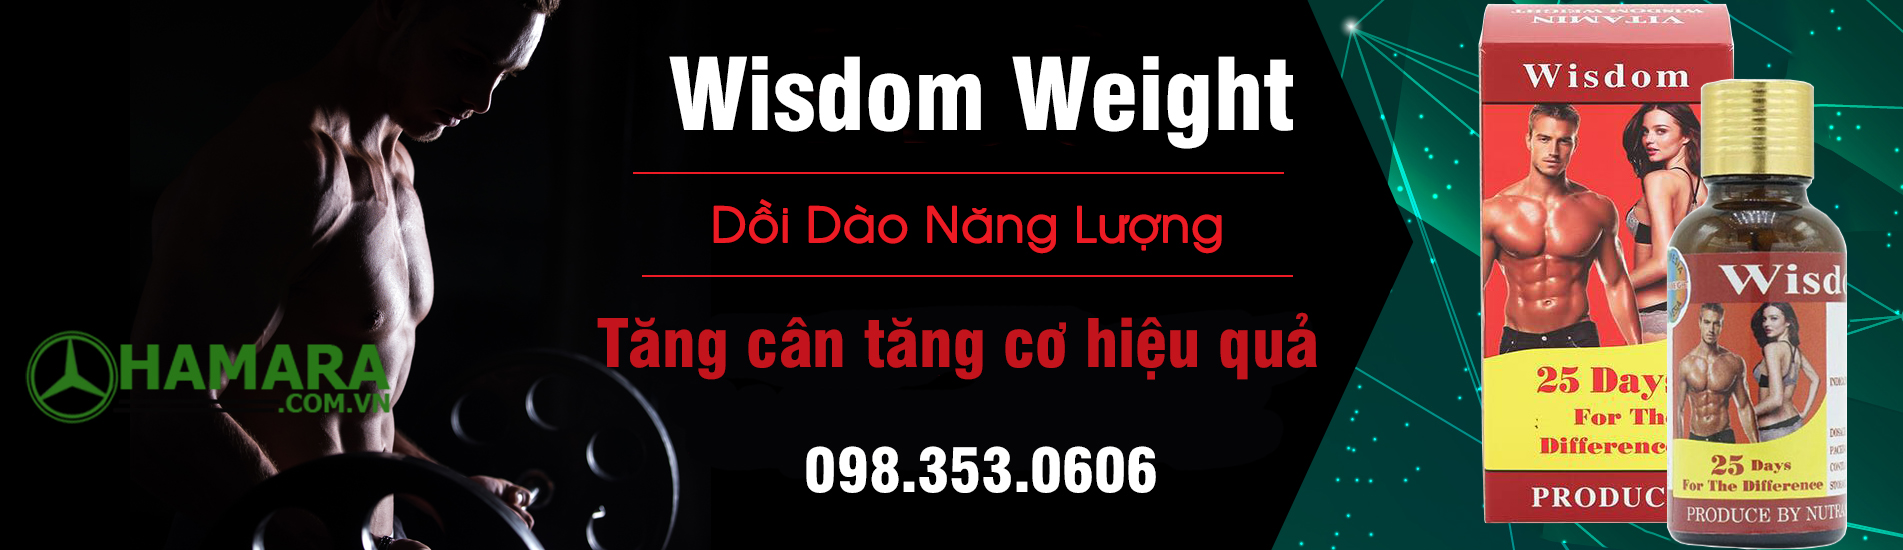 công dụng wisdom weight